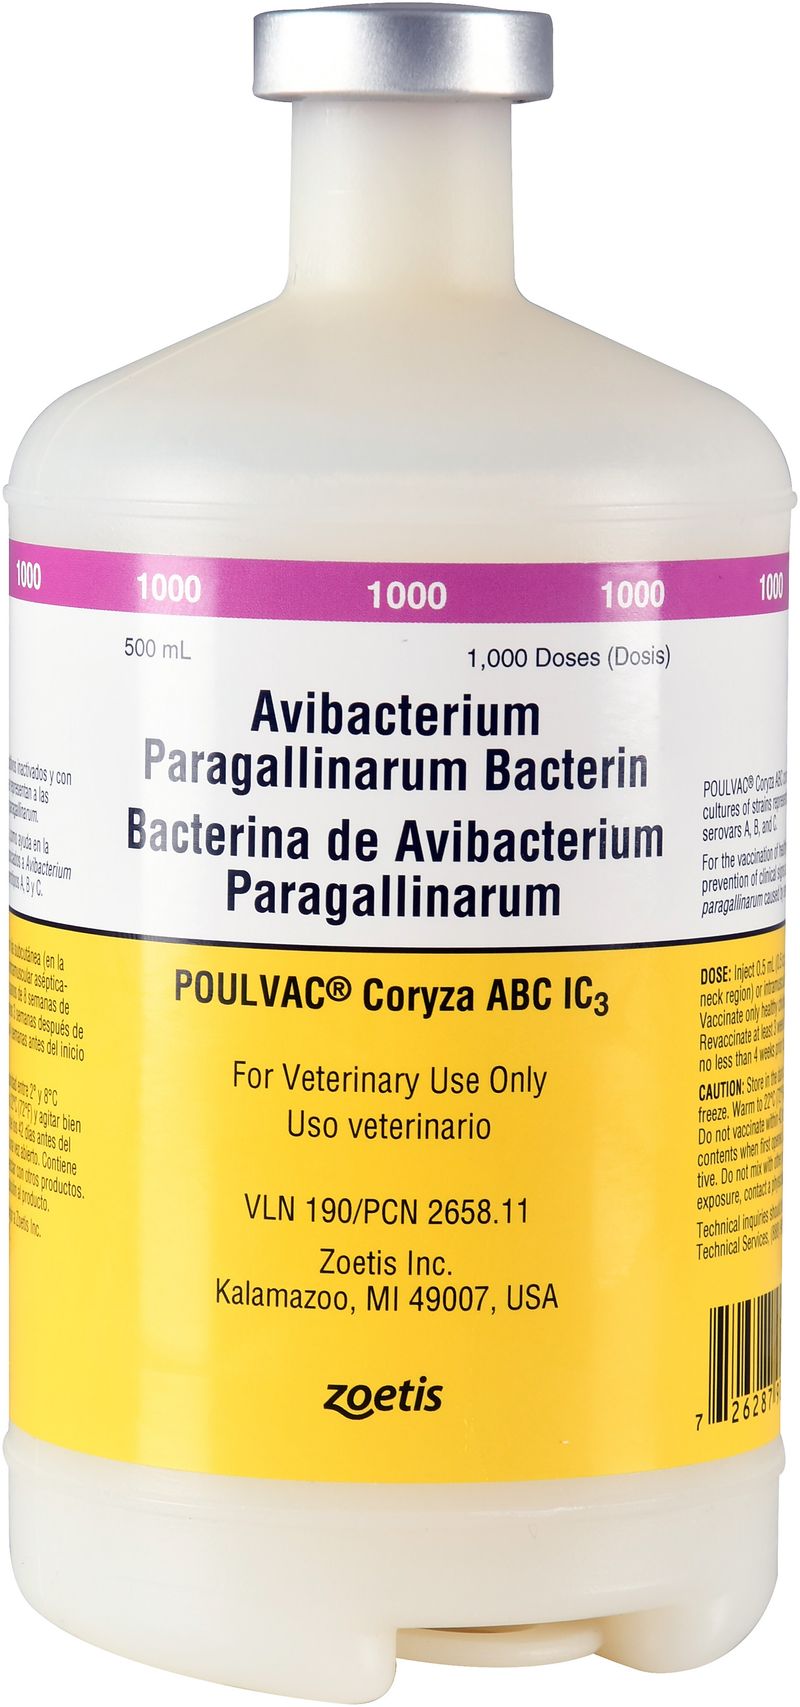 POULVAC®-Coryza-ABC-IC3--Haemophilus-Paragallinarum-Bacterin--500-mL